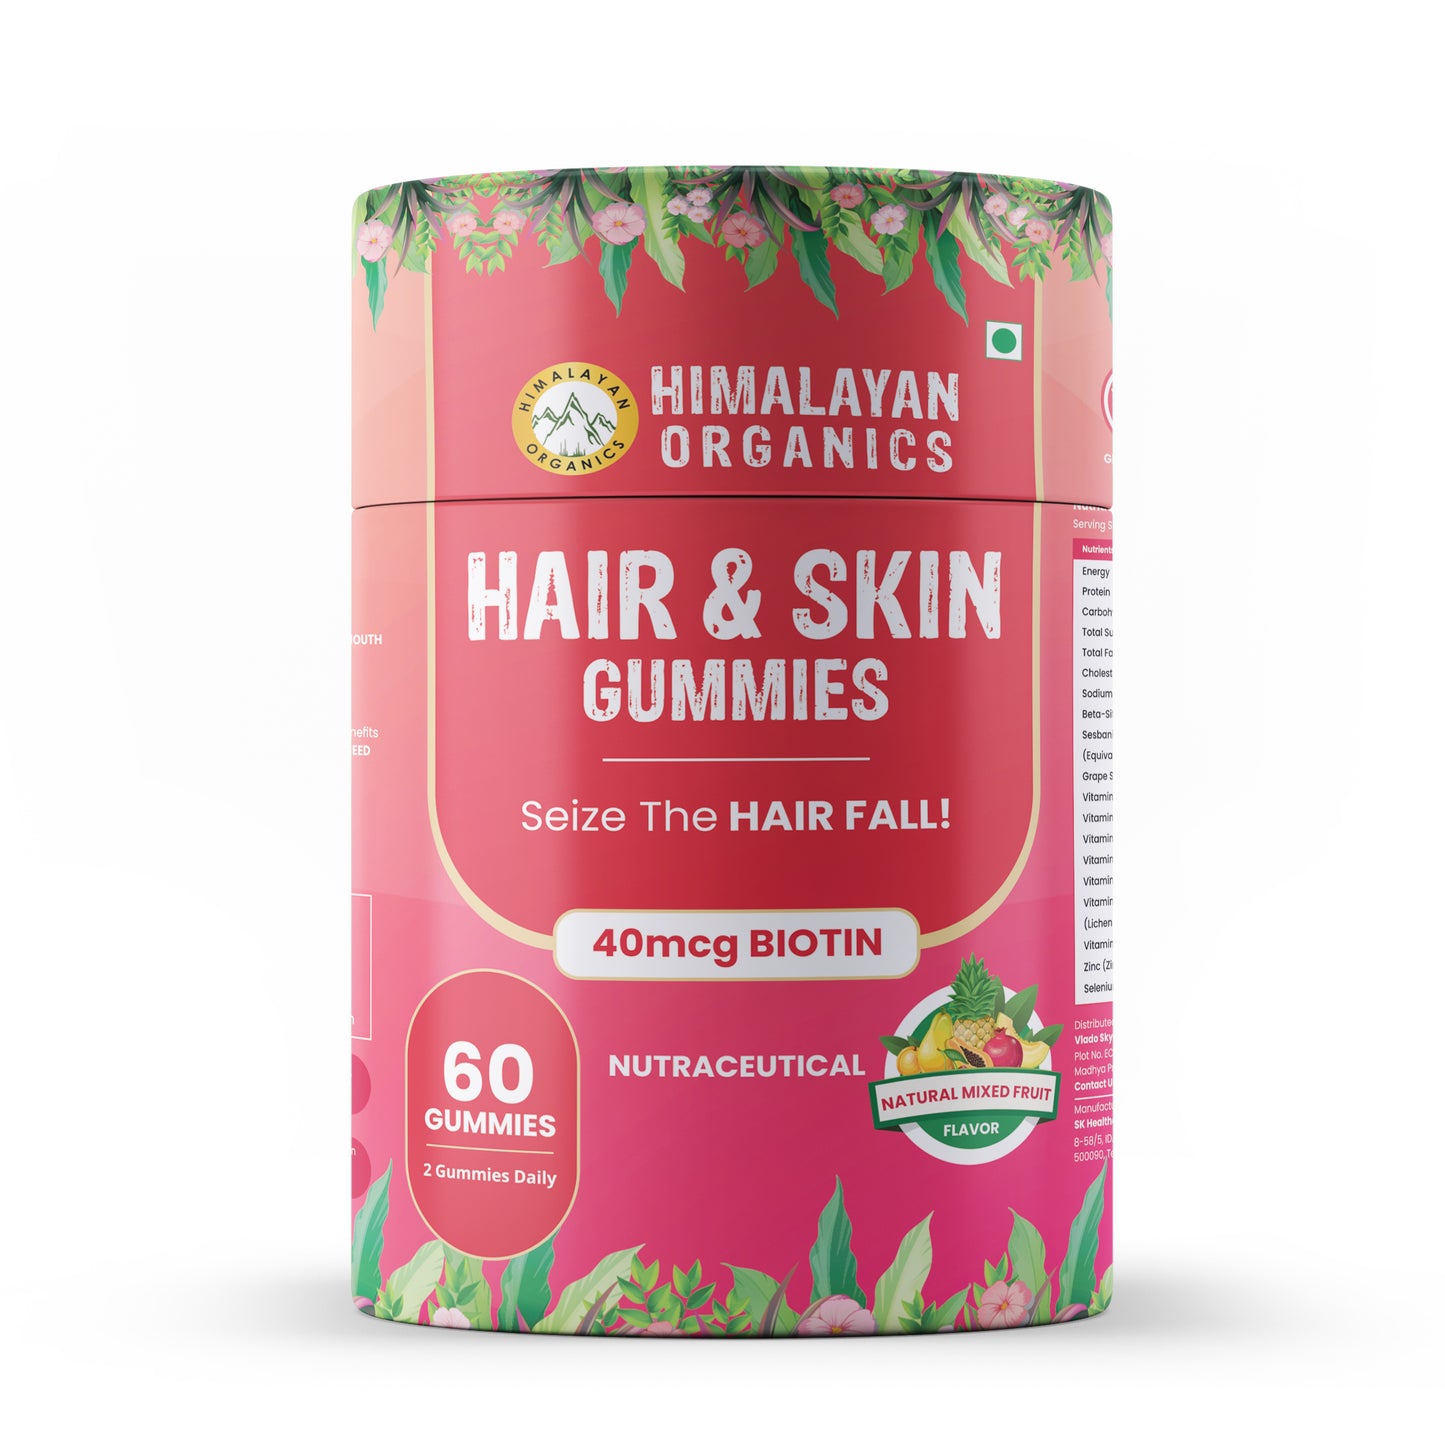 Himalayan Organics Hair & Skin Gummies 40 mcg Biotin For Hair Growth & Glowing Skin (60 Gummies)